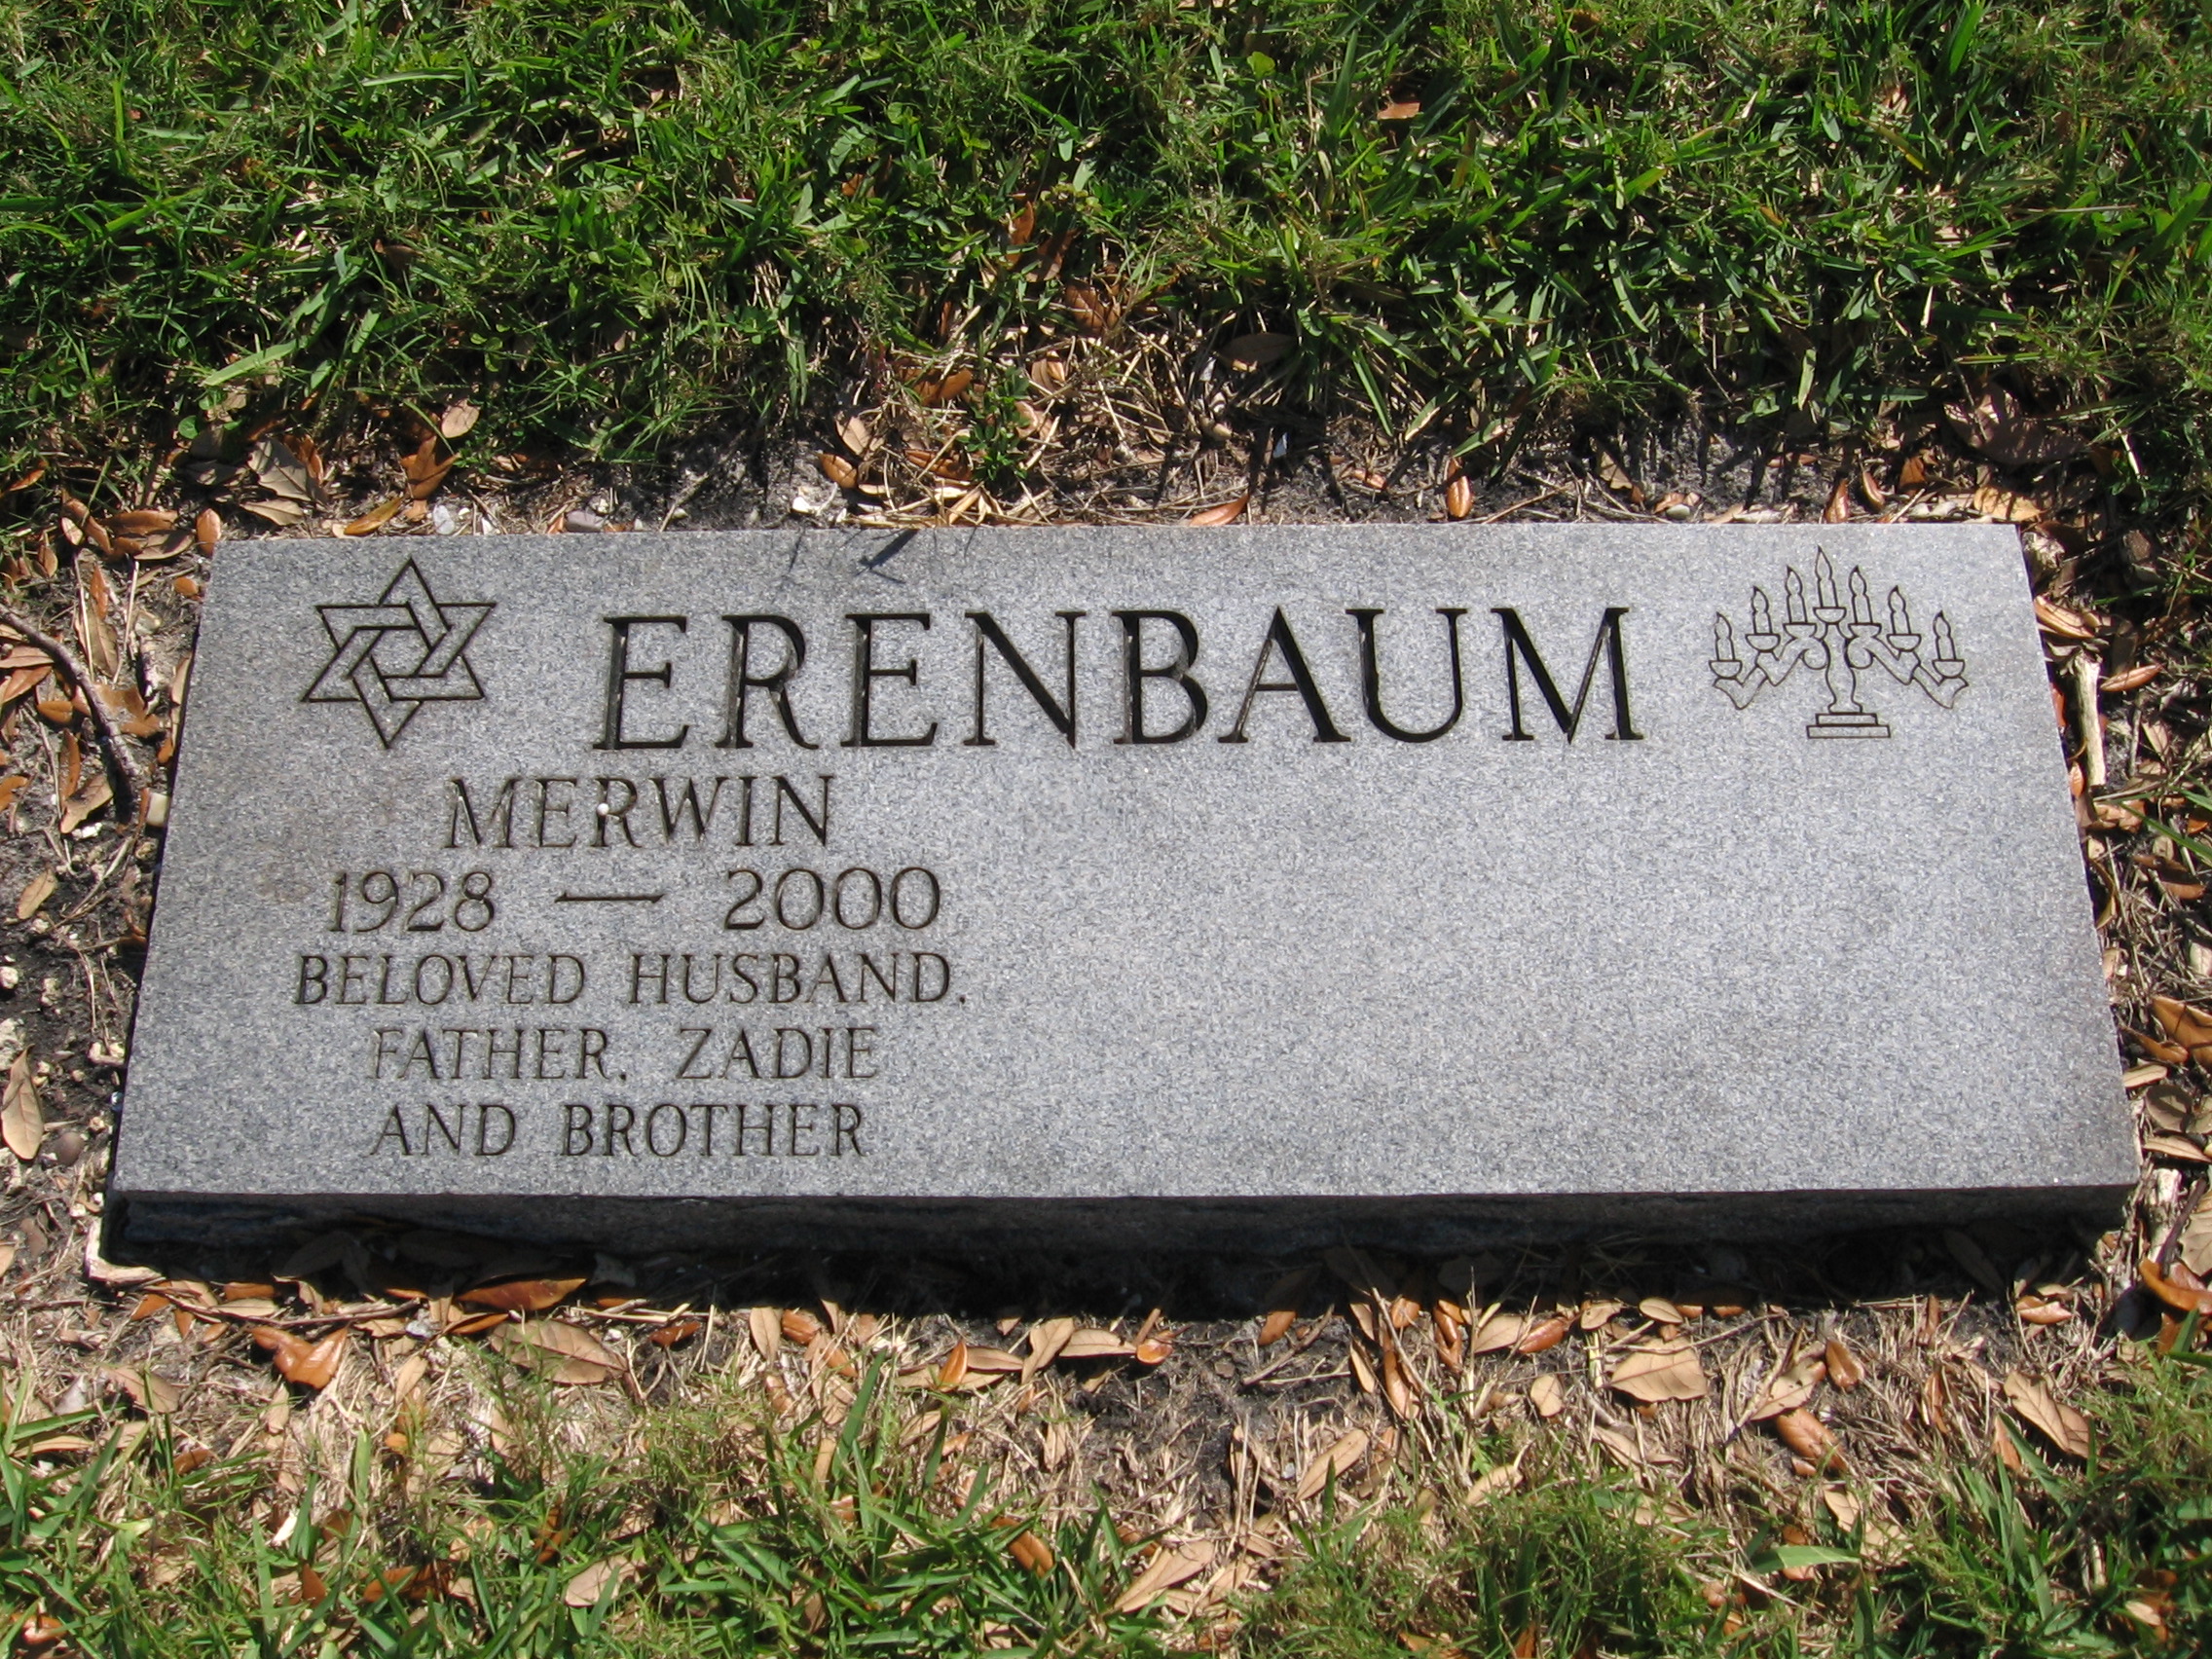 Merwin Erenbaum